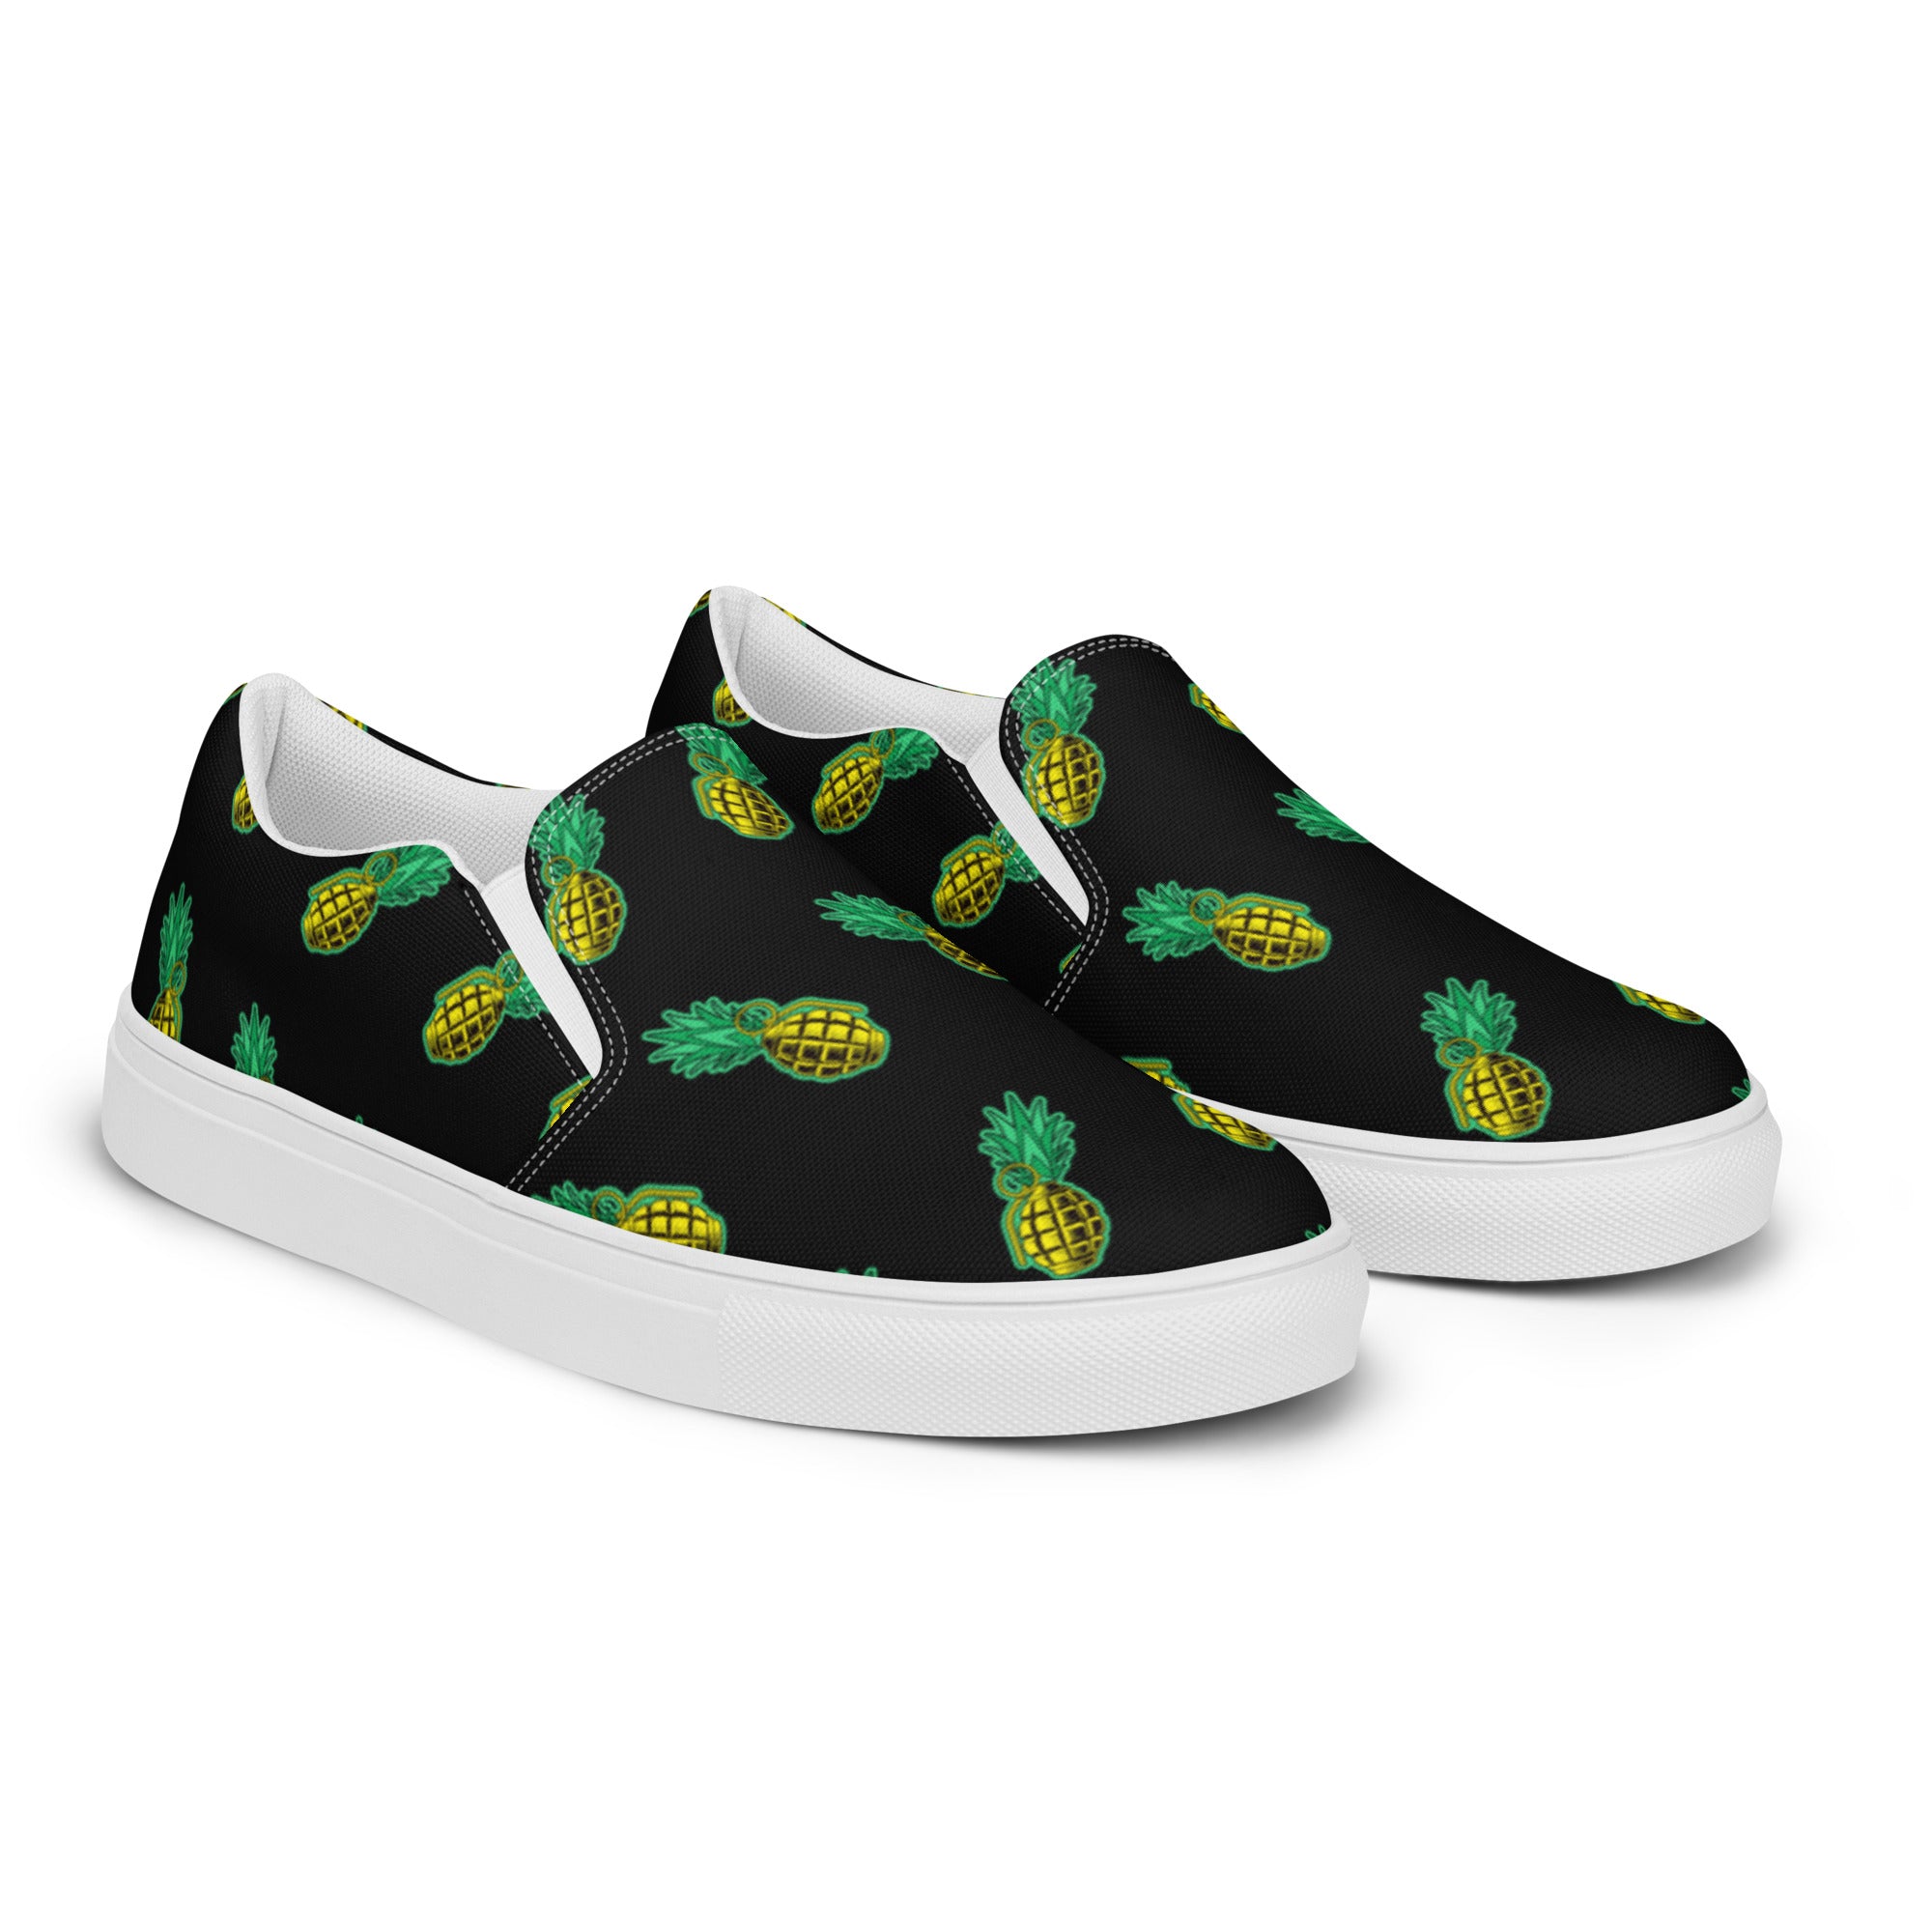 Rad Palm Pineapple Death Men’s Slip-On Canvas Shoes